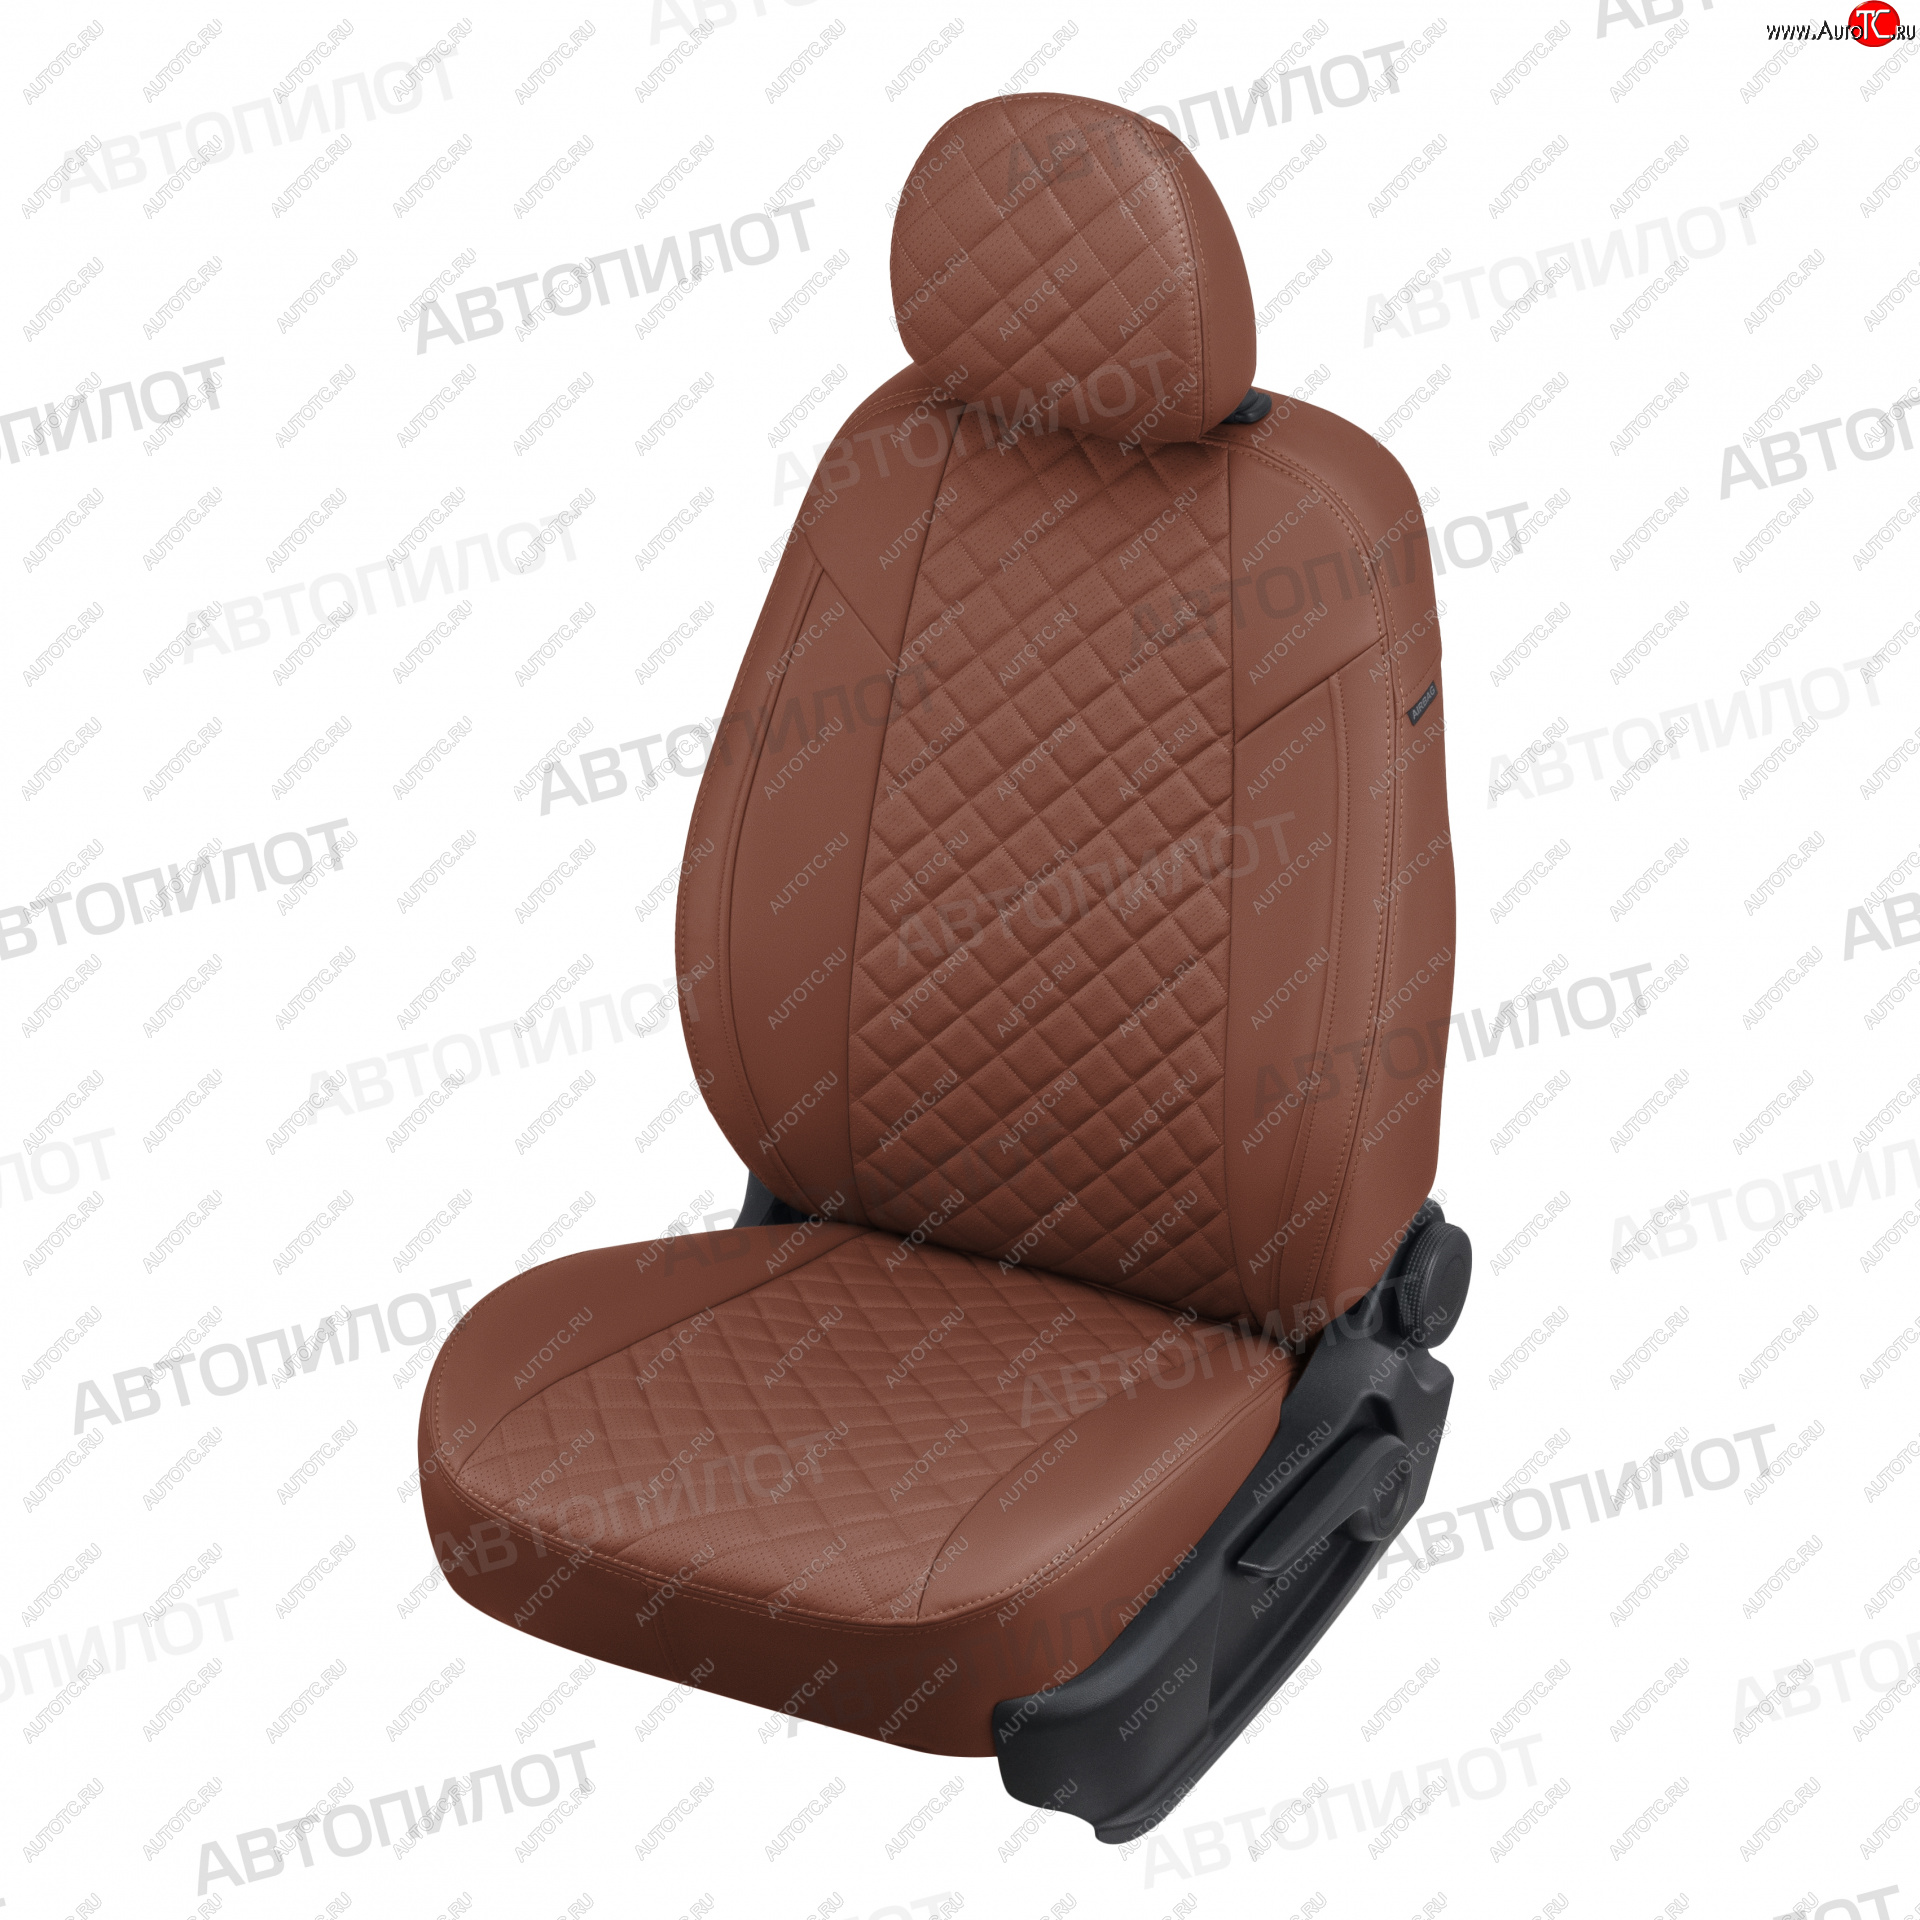 13 999 р. Чехлы сидений (экокожа) Автопилот Ромб  KIA Sportage  3 SL (2010-2016) (коричневый)